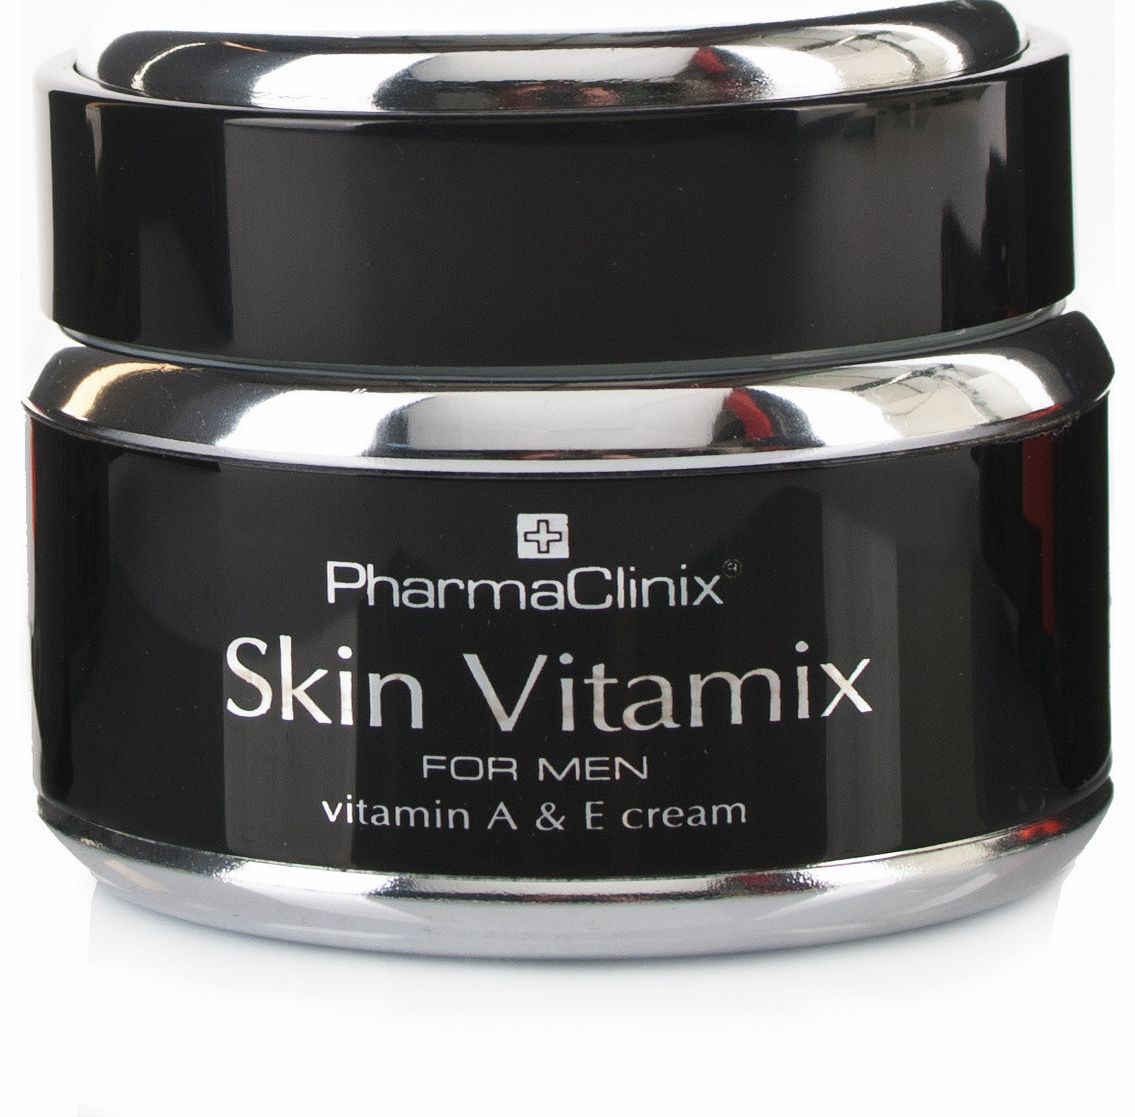 PharmaClinix Skin Vitamix For Men